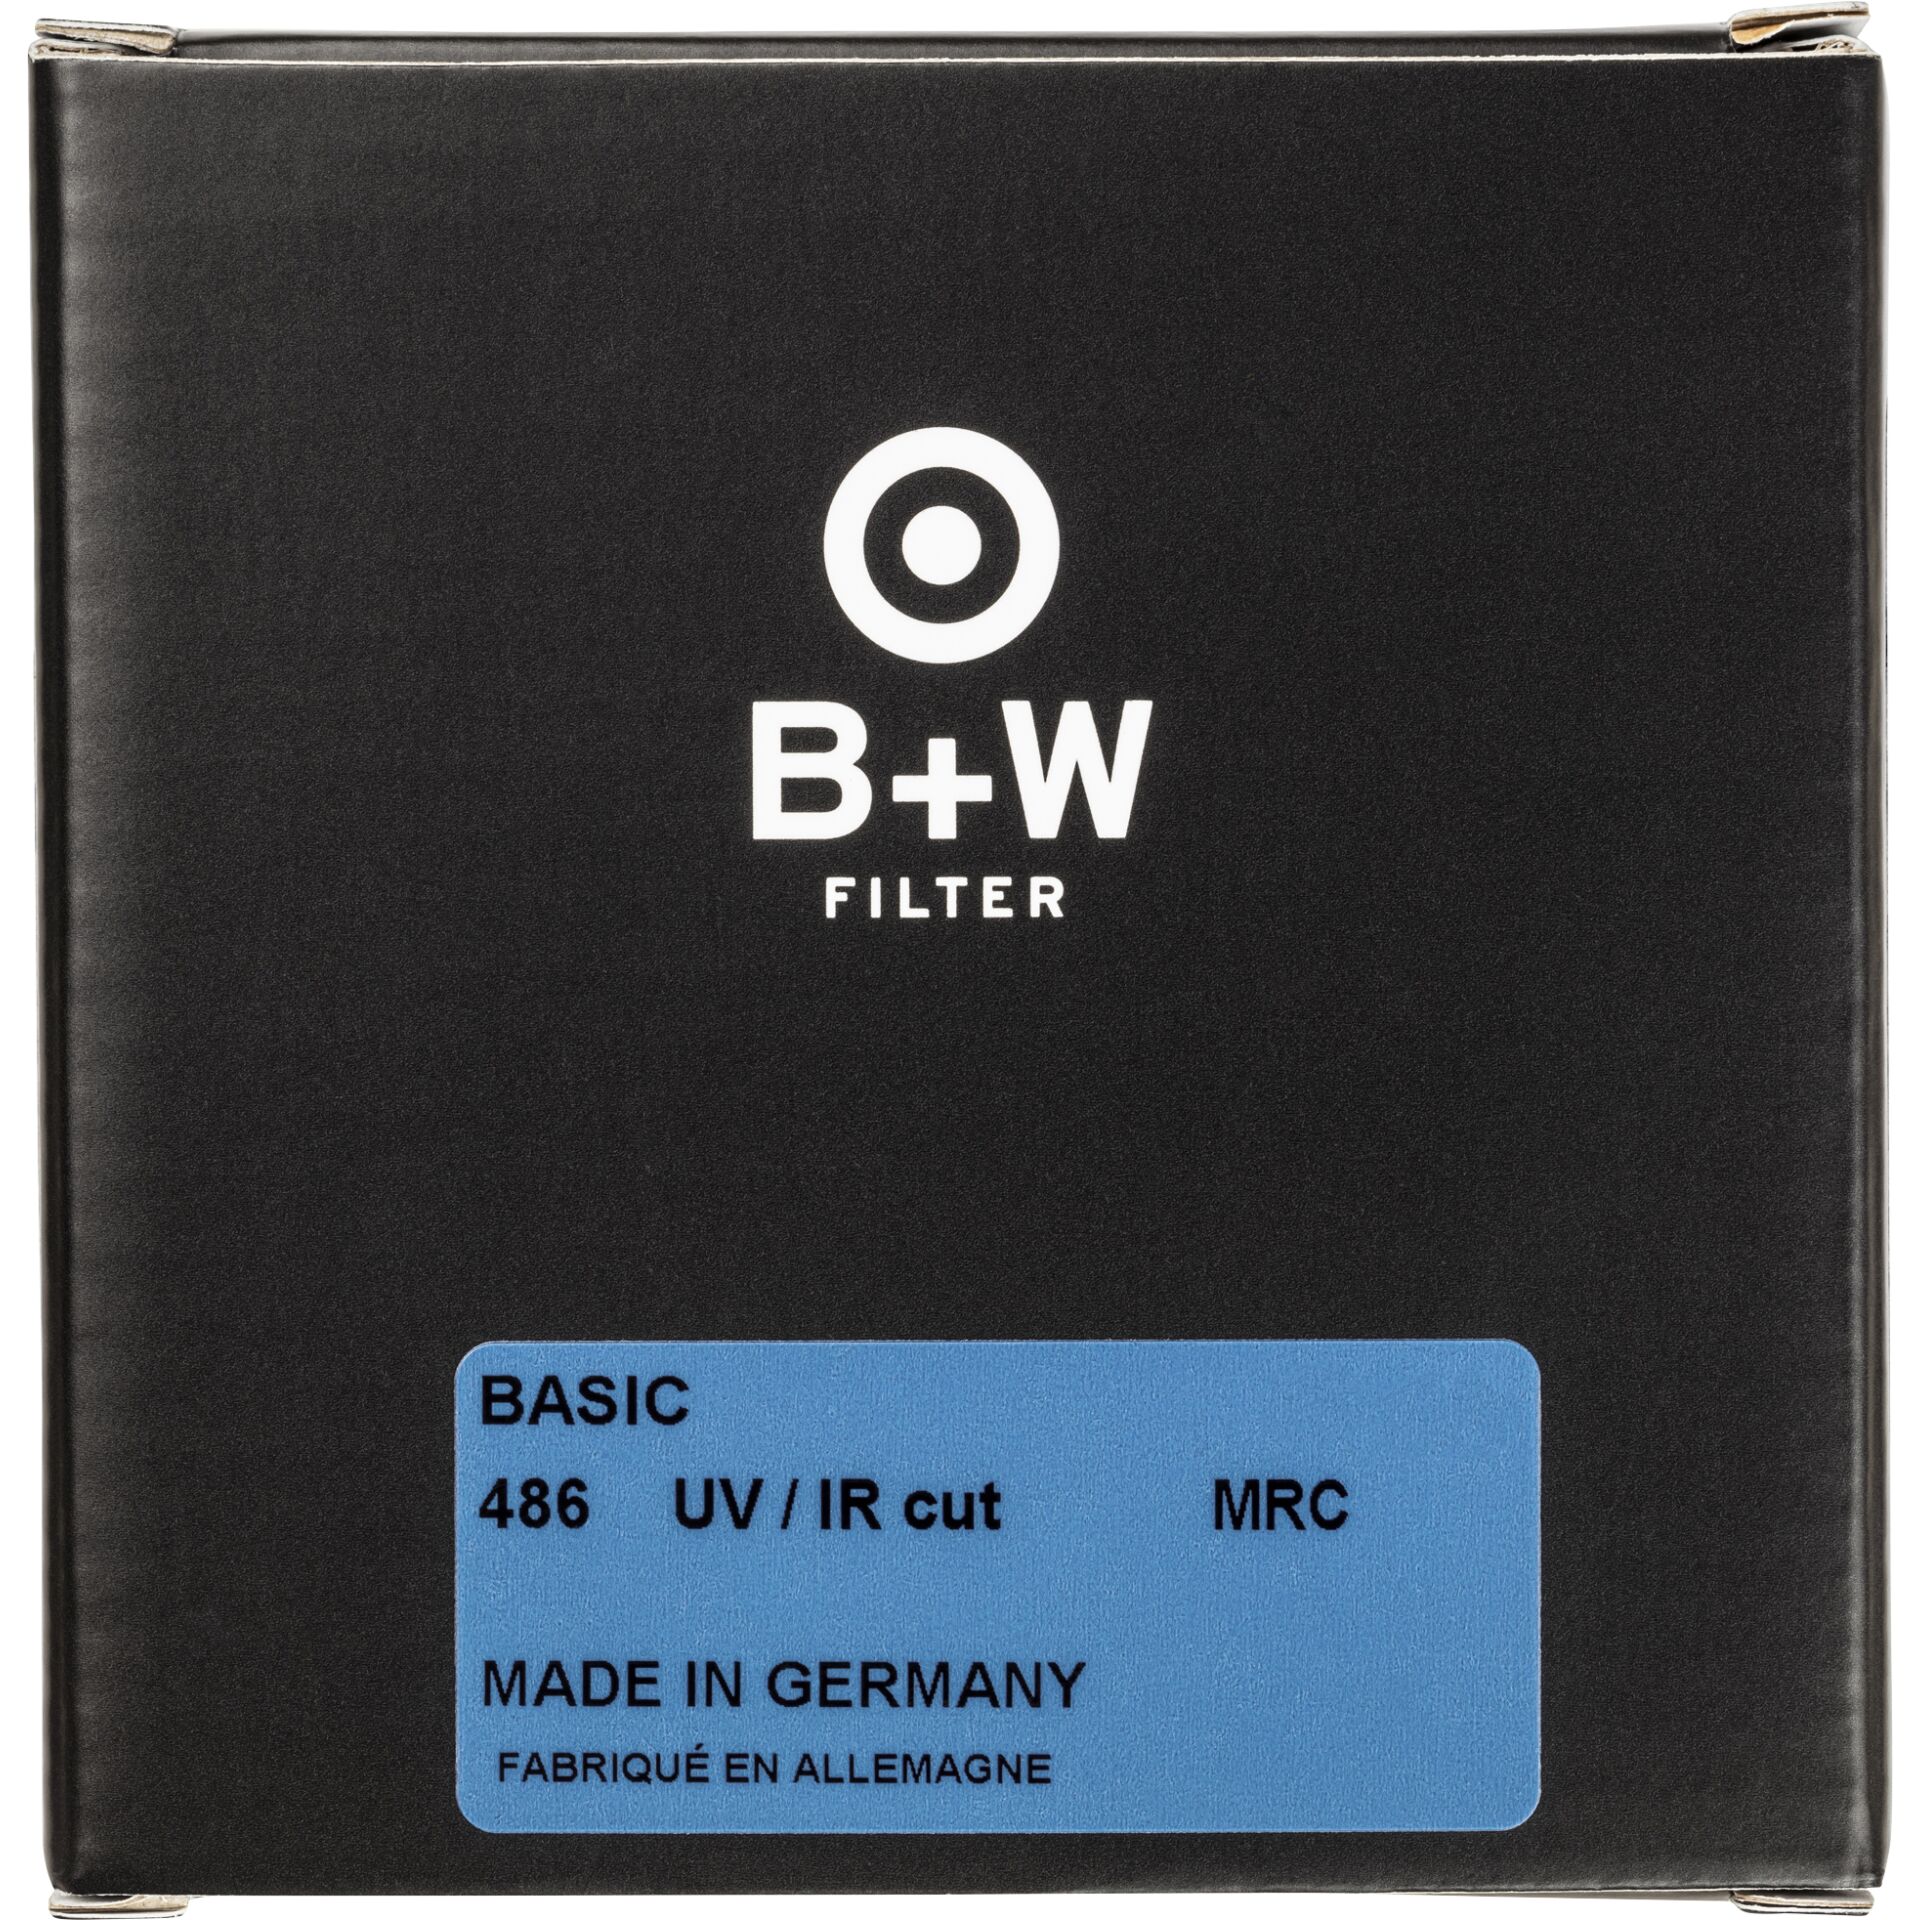 B+W UV-IR CUT 486 MRC BASIC 37mm